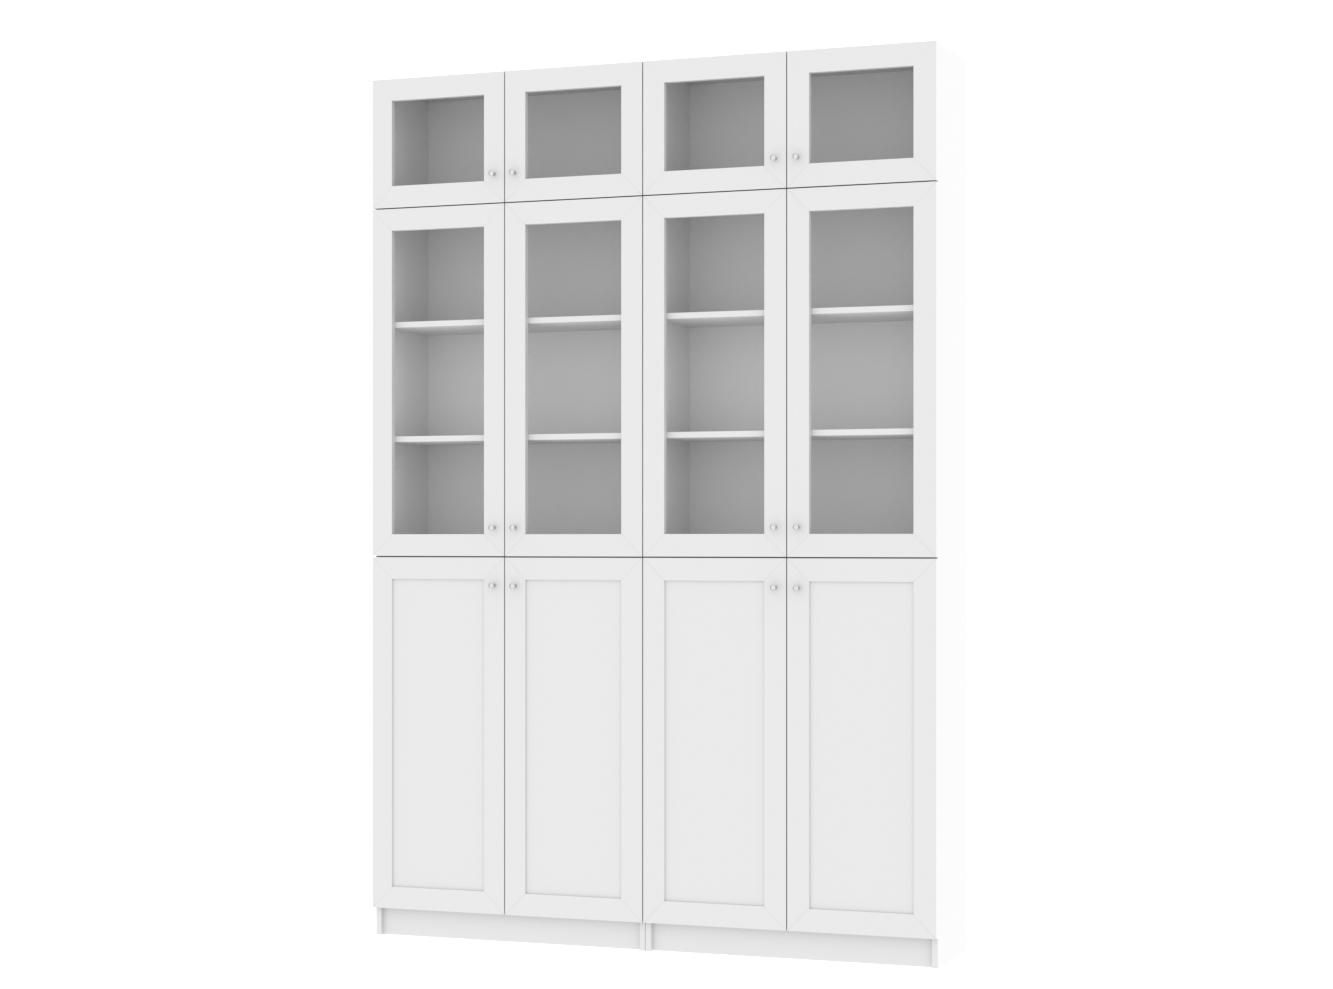 Книжный шкаф Билли 394 white ИКЕА (IKEA) изображение товара